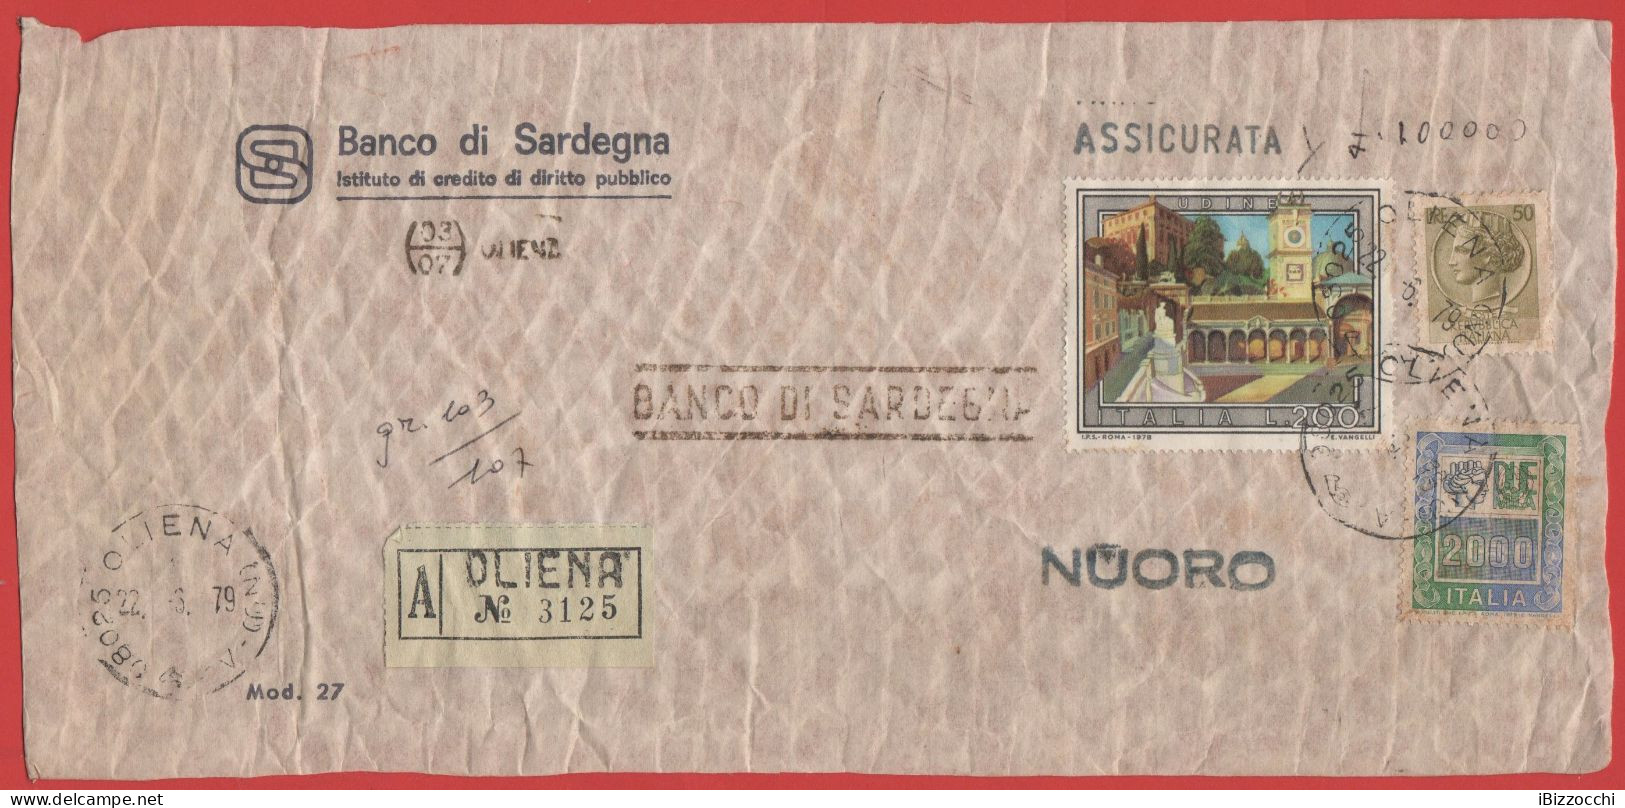 ITALIA - Storia Postale Repubblica - 1979 - 200 Turismo 5ª Emissione; Udine + 50 Antica Moneta Siracusana + 2000 Alti Va - 1981-90: Marcofilie